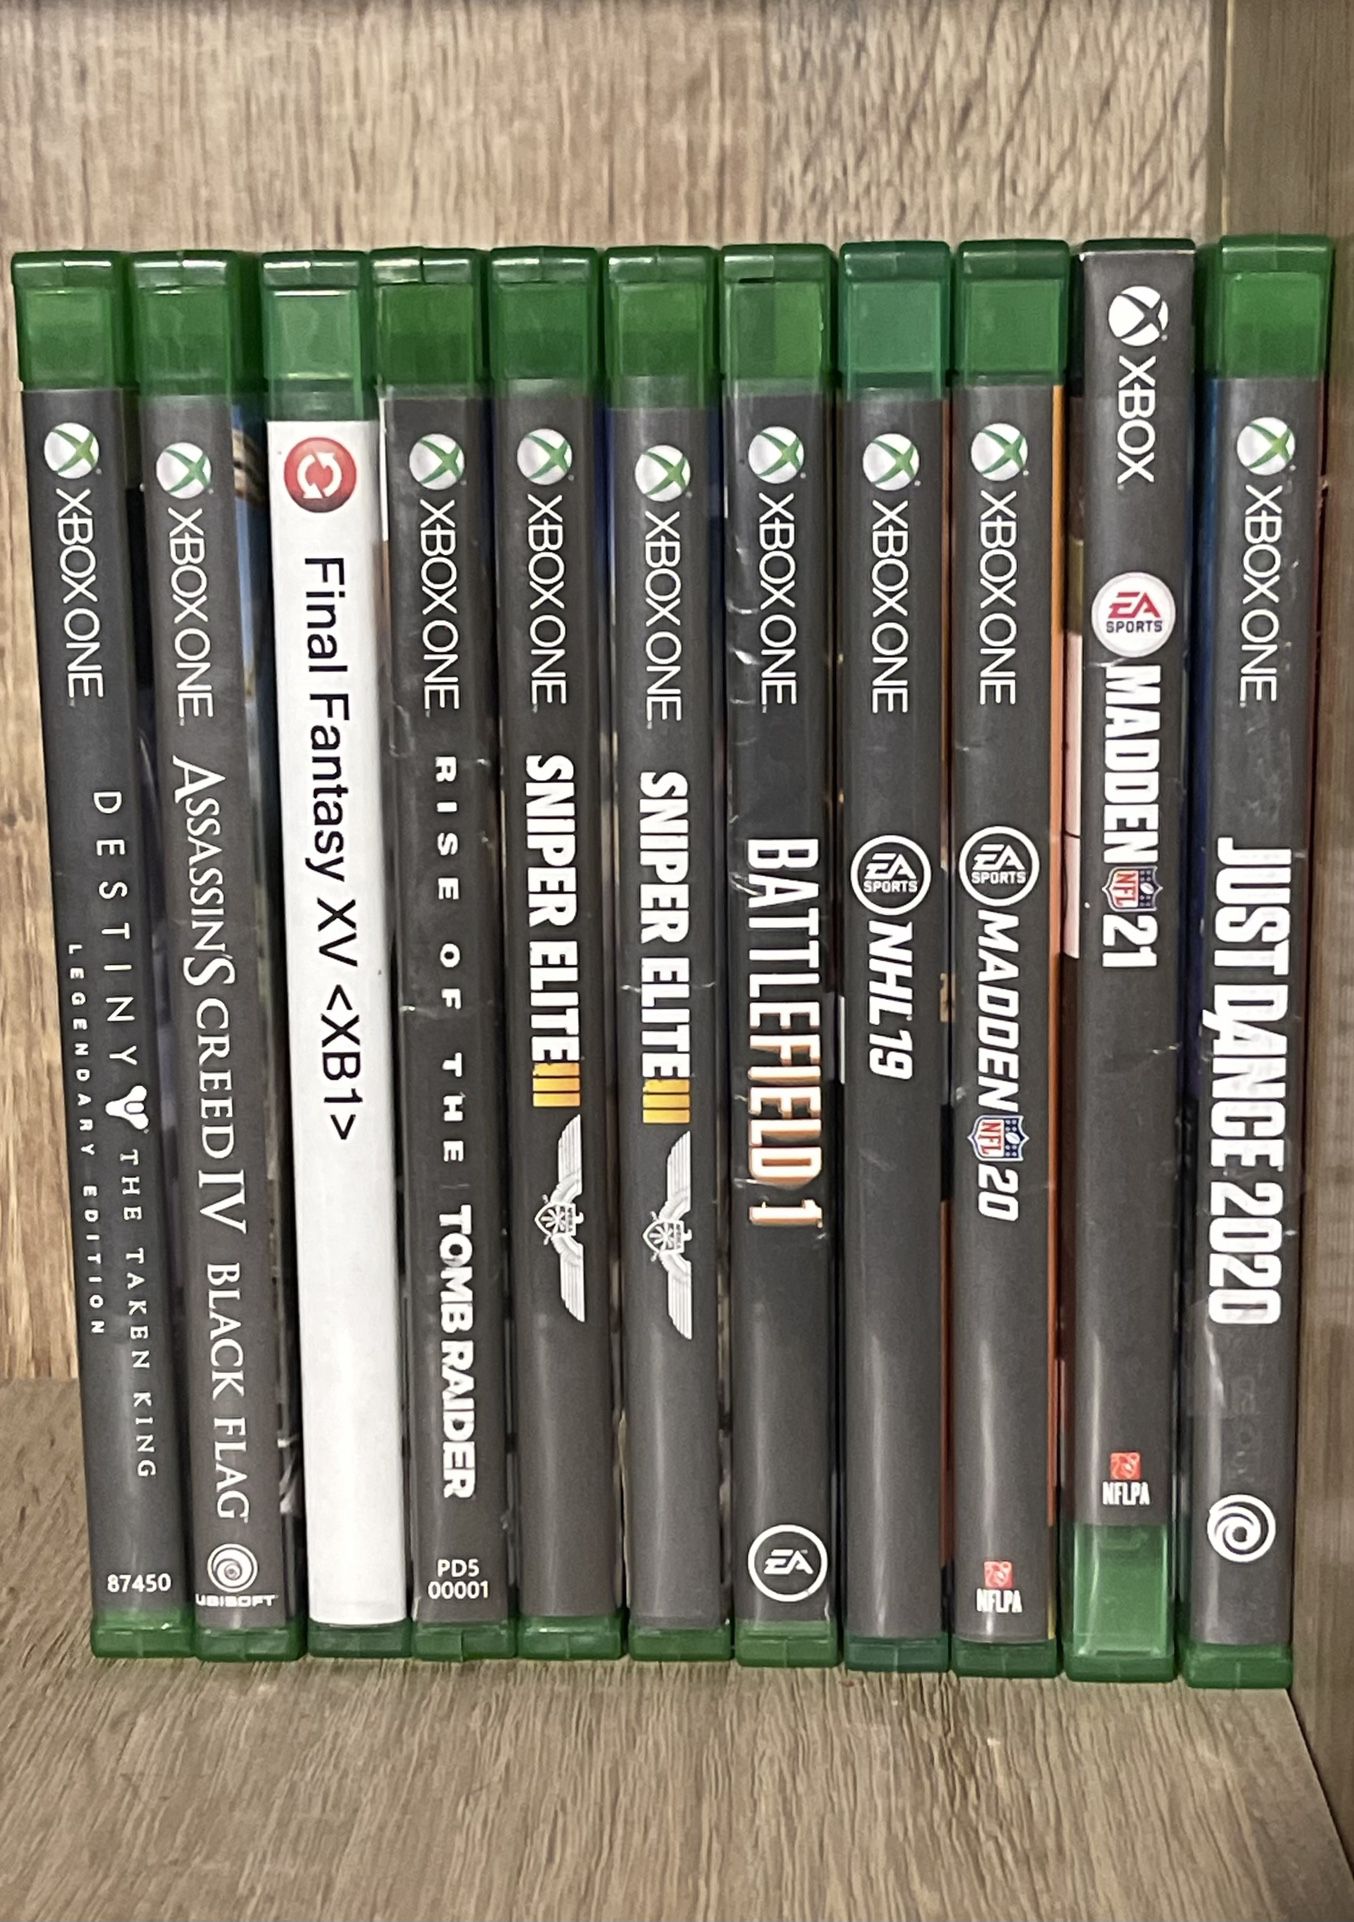 Xbox One Games $7 Each